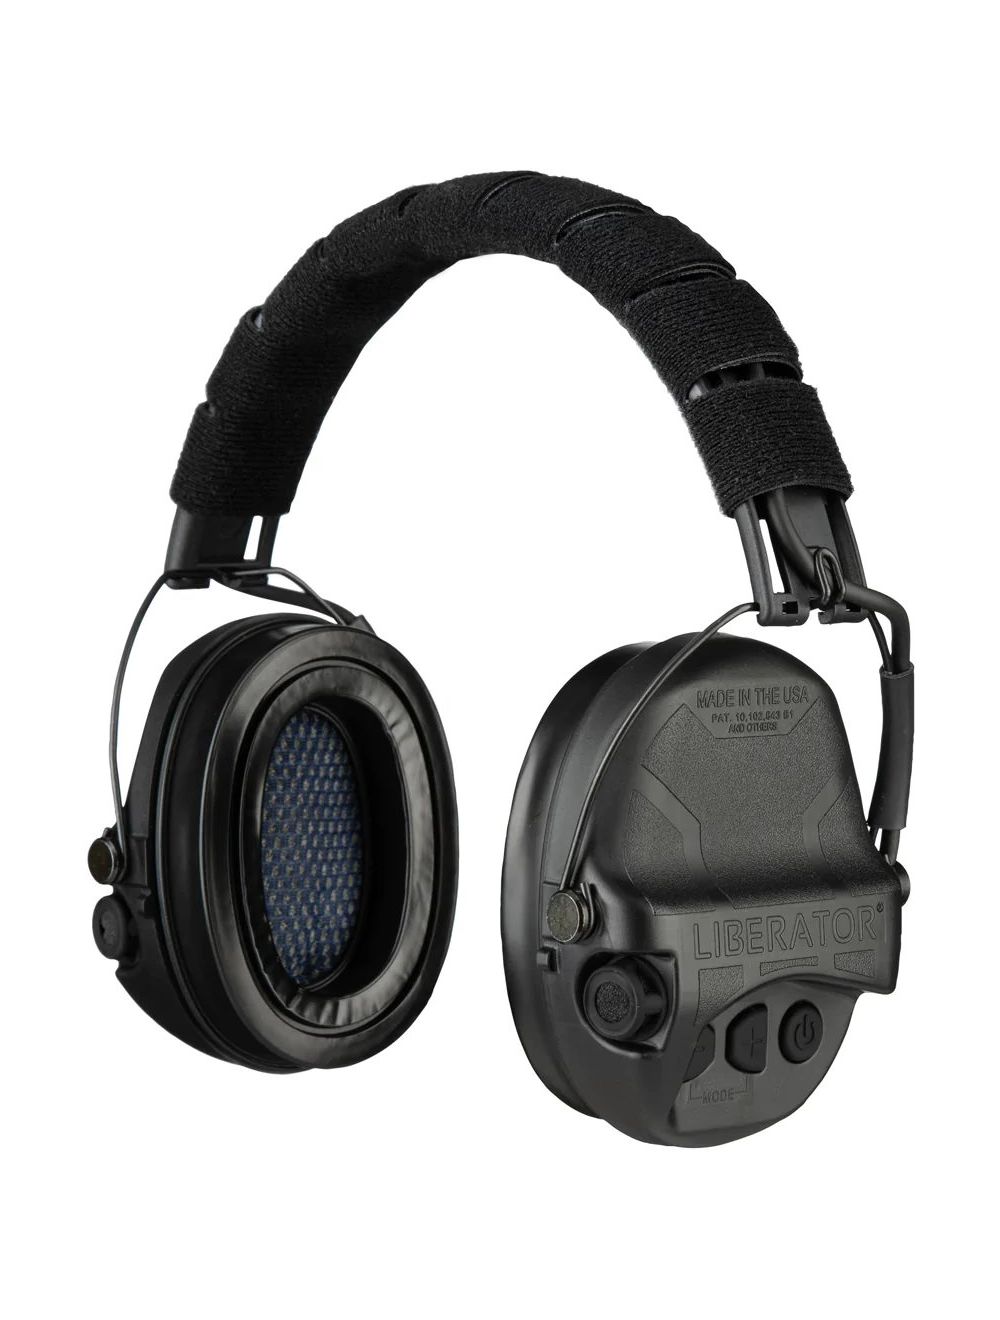 Safariland TCI Liberator HP Hearing Protection Headset - Shooting Accessories